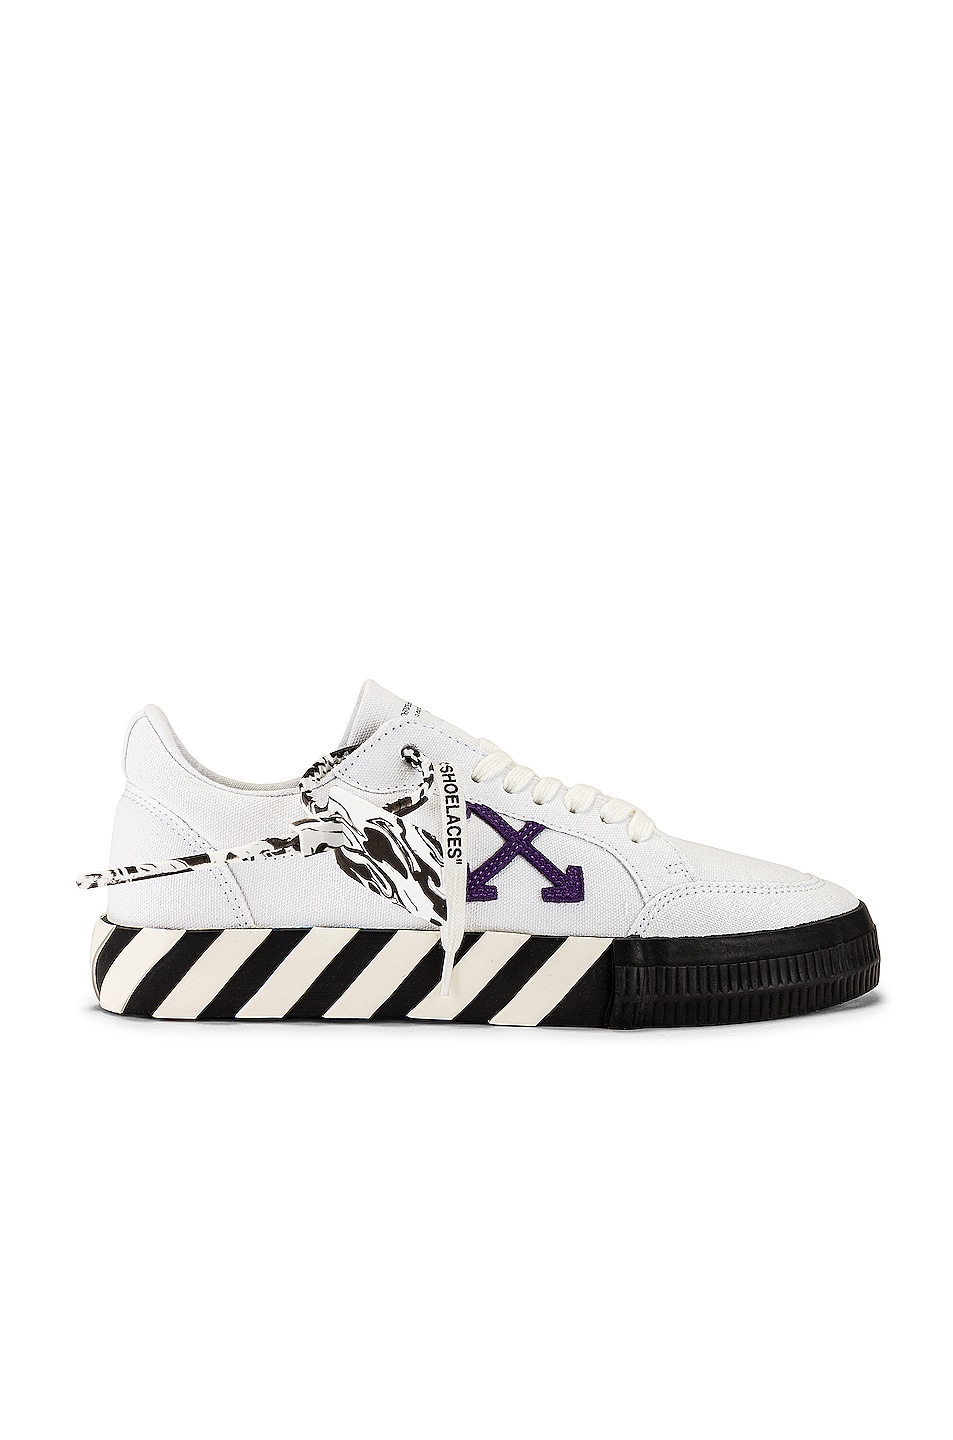  OFF  WHITE  Low Vulcanized Canvas Sneaker in White  Purple  